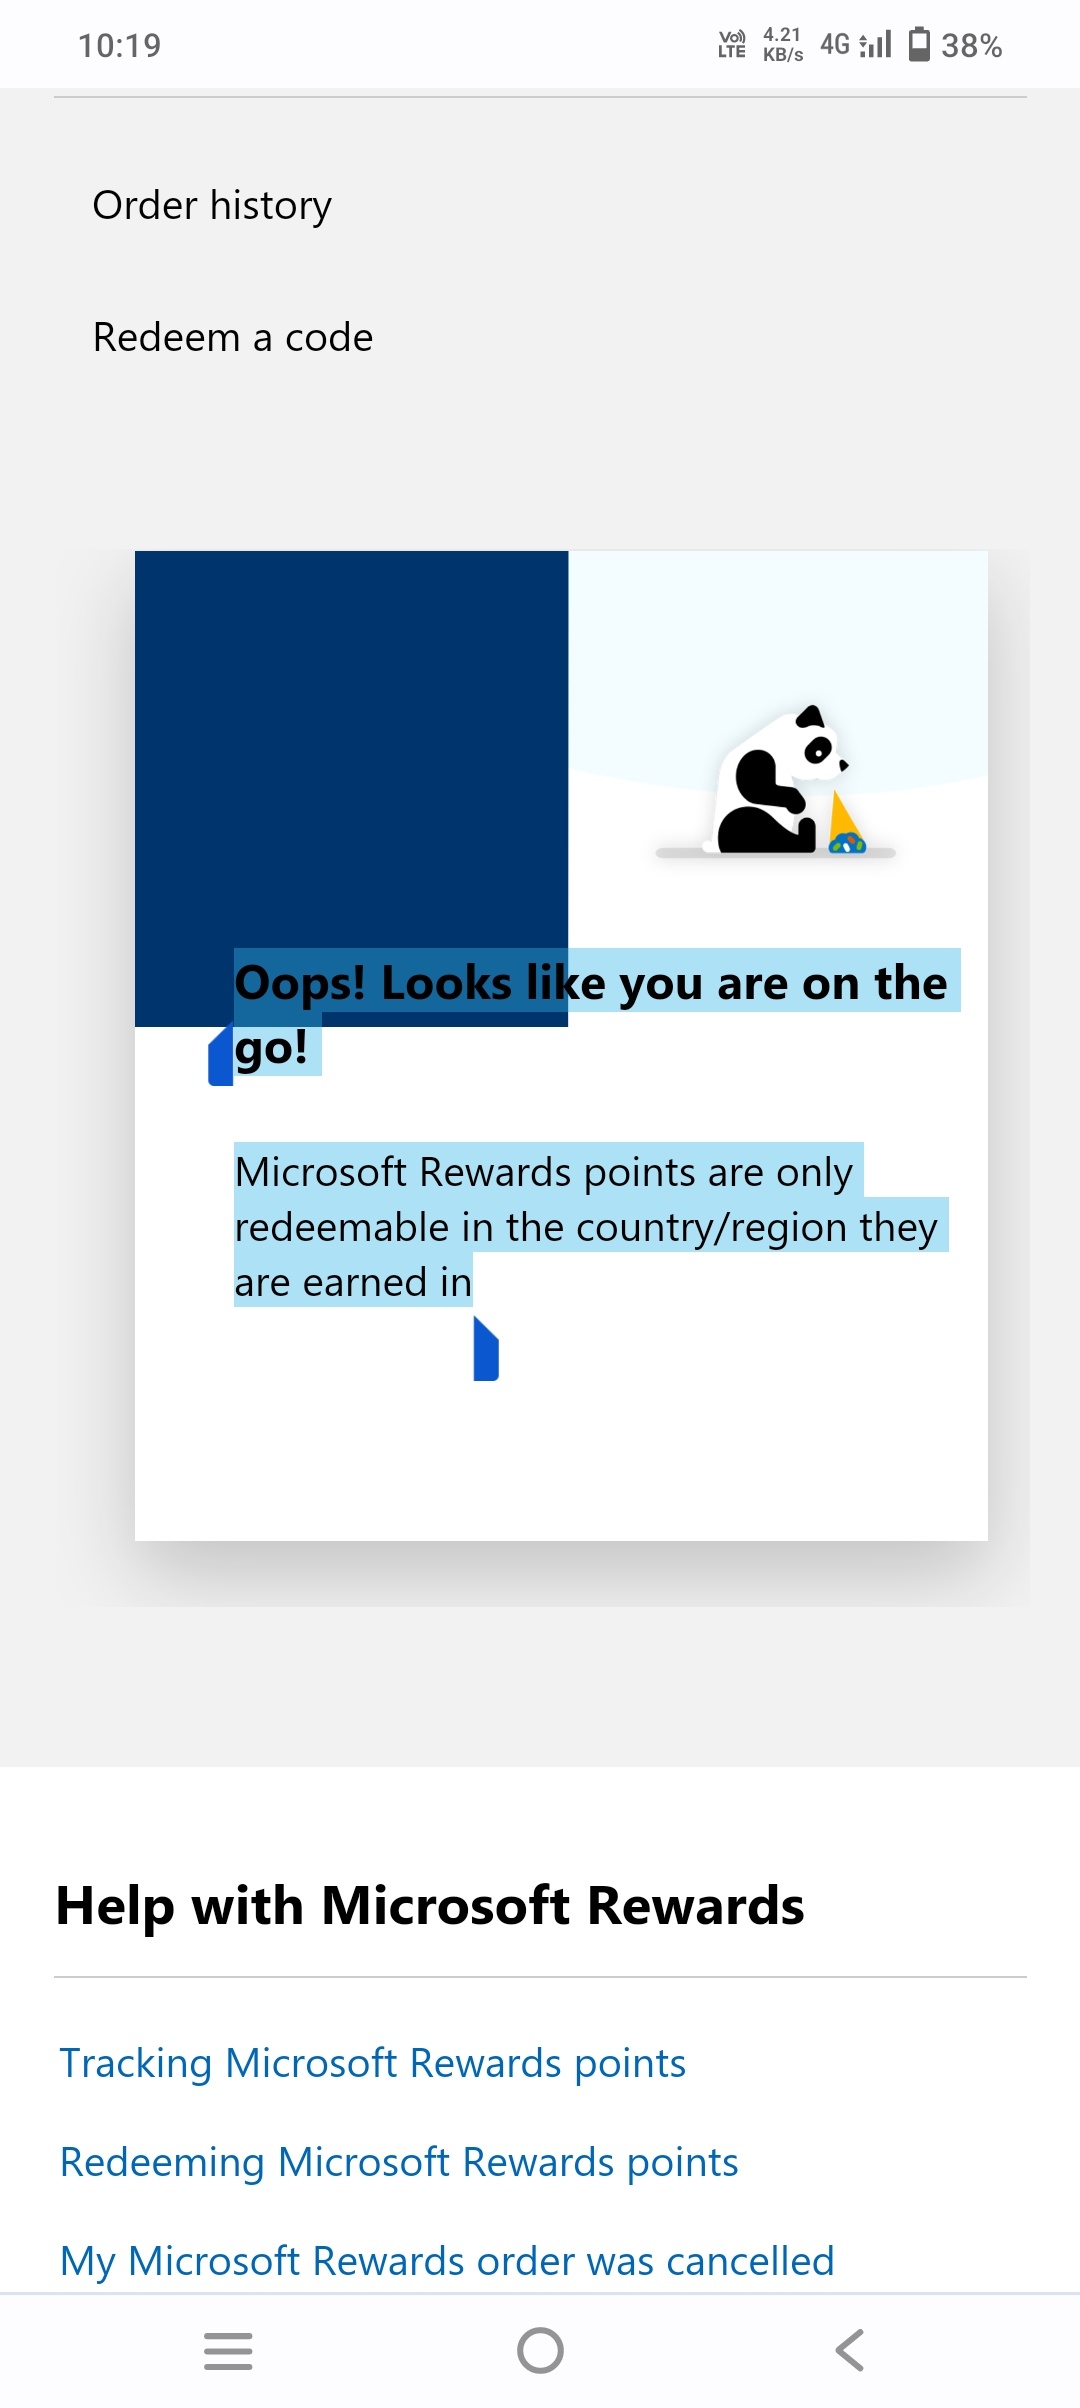 Microsoft Rewards🪙 สะสมแต้มไปแลกGift Card, Gallery posted by ByteBuzz